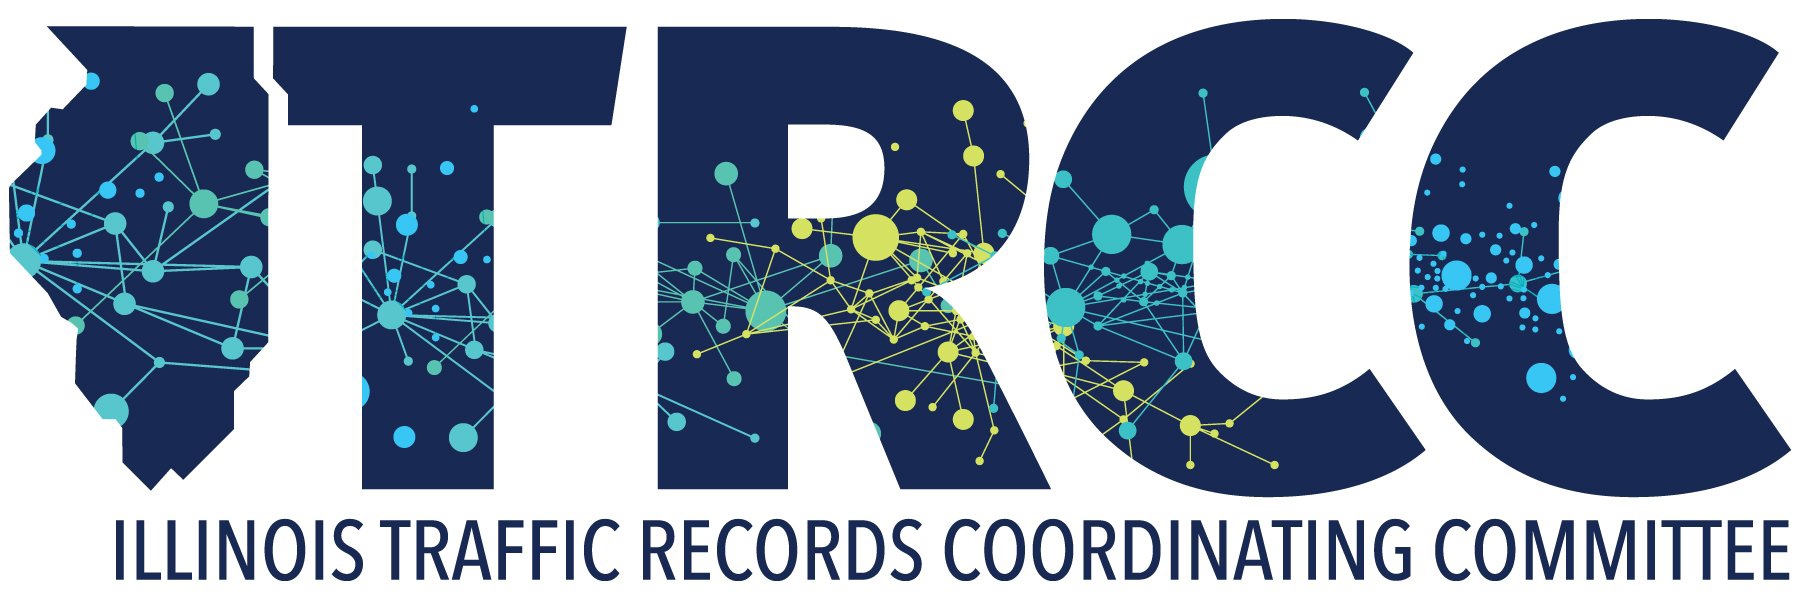 Illinois Traffic Records Coordinating Committee Logo